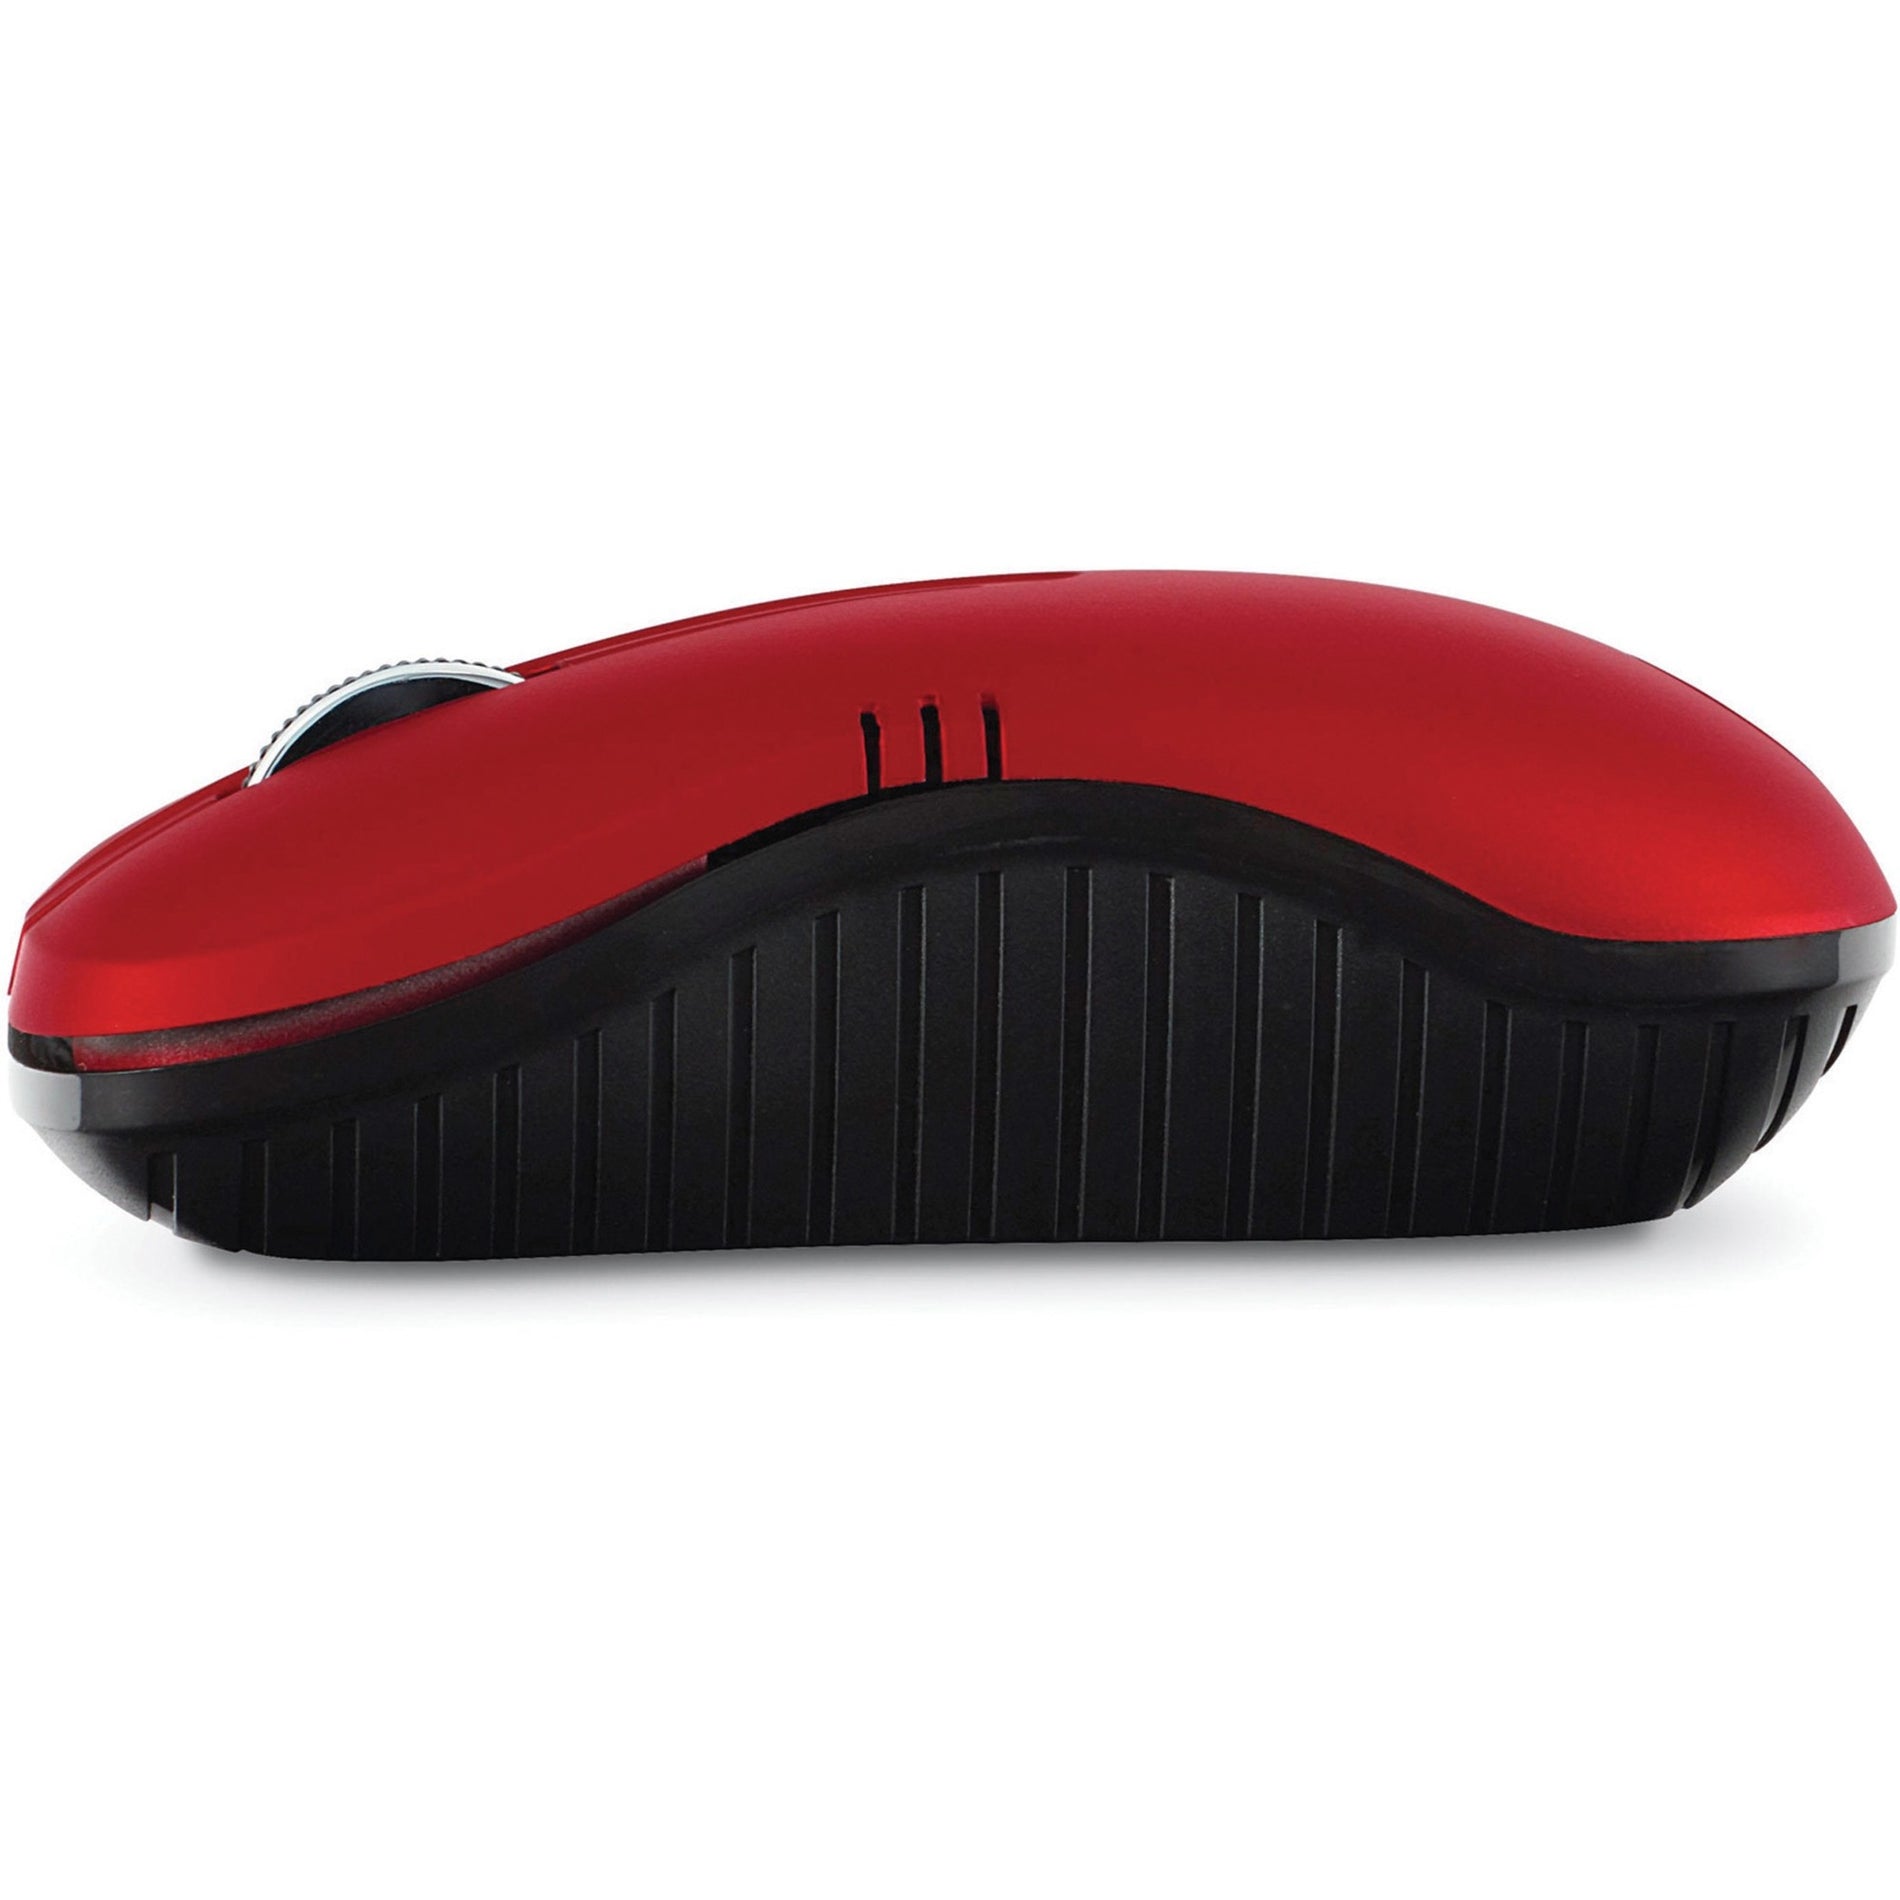 Verbatim 99767 Wireless Notebook Optical Mouse, Commuter Series - Matte Red